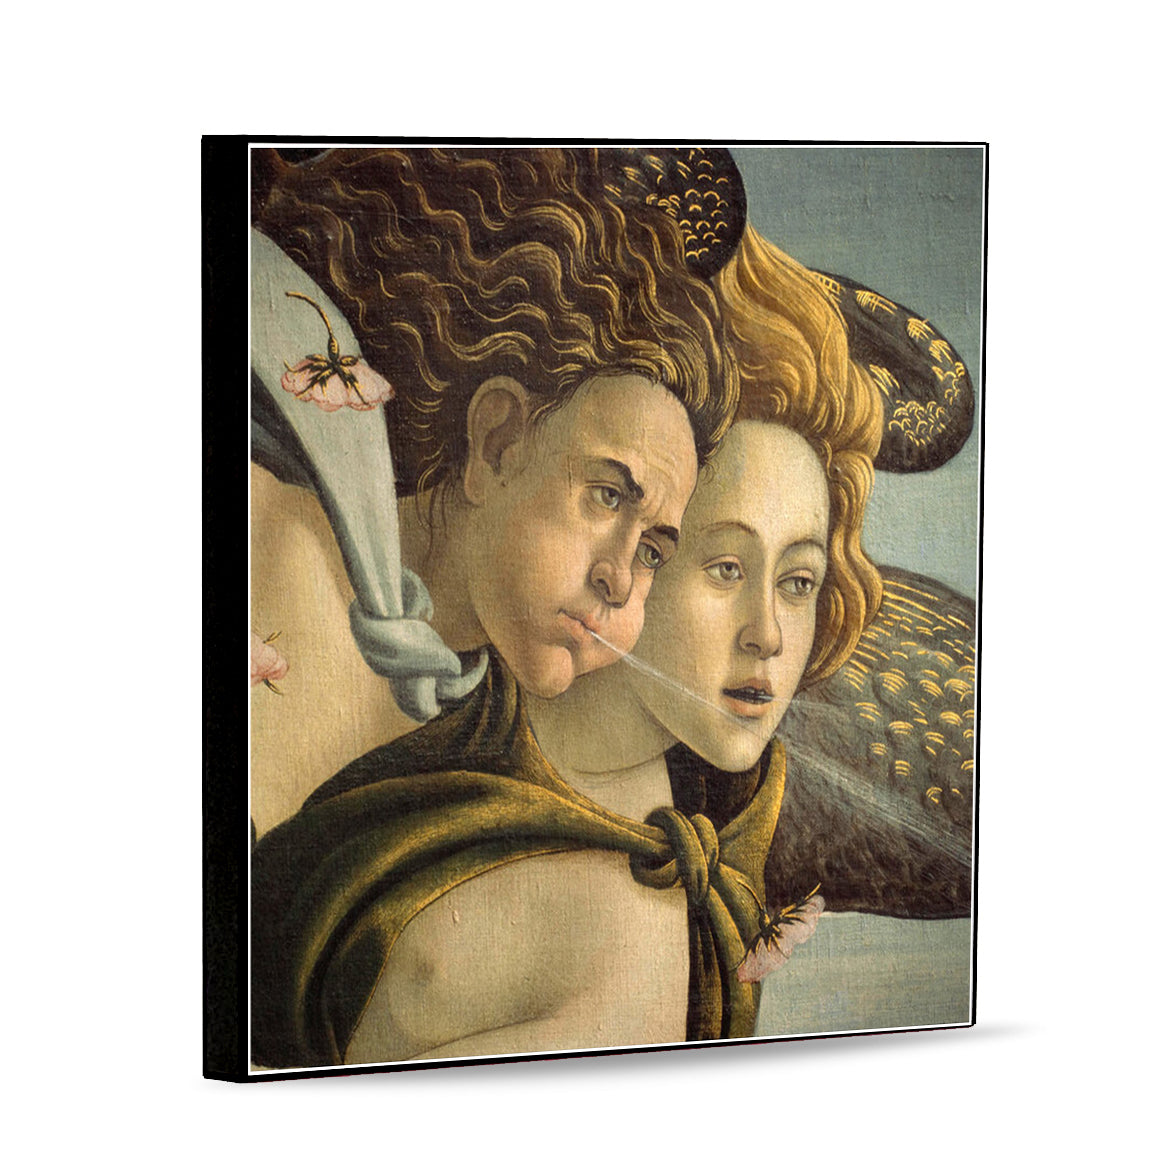 AFFRESCO: Panel Tile - Opera "The Birth of Venus (Detail)" by Sandro Botticelli